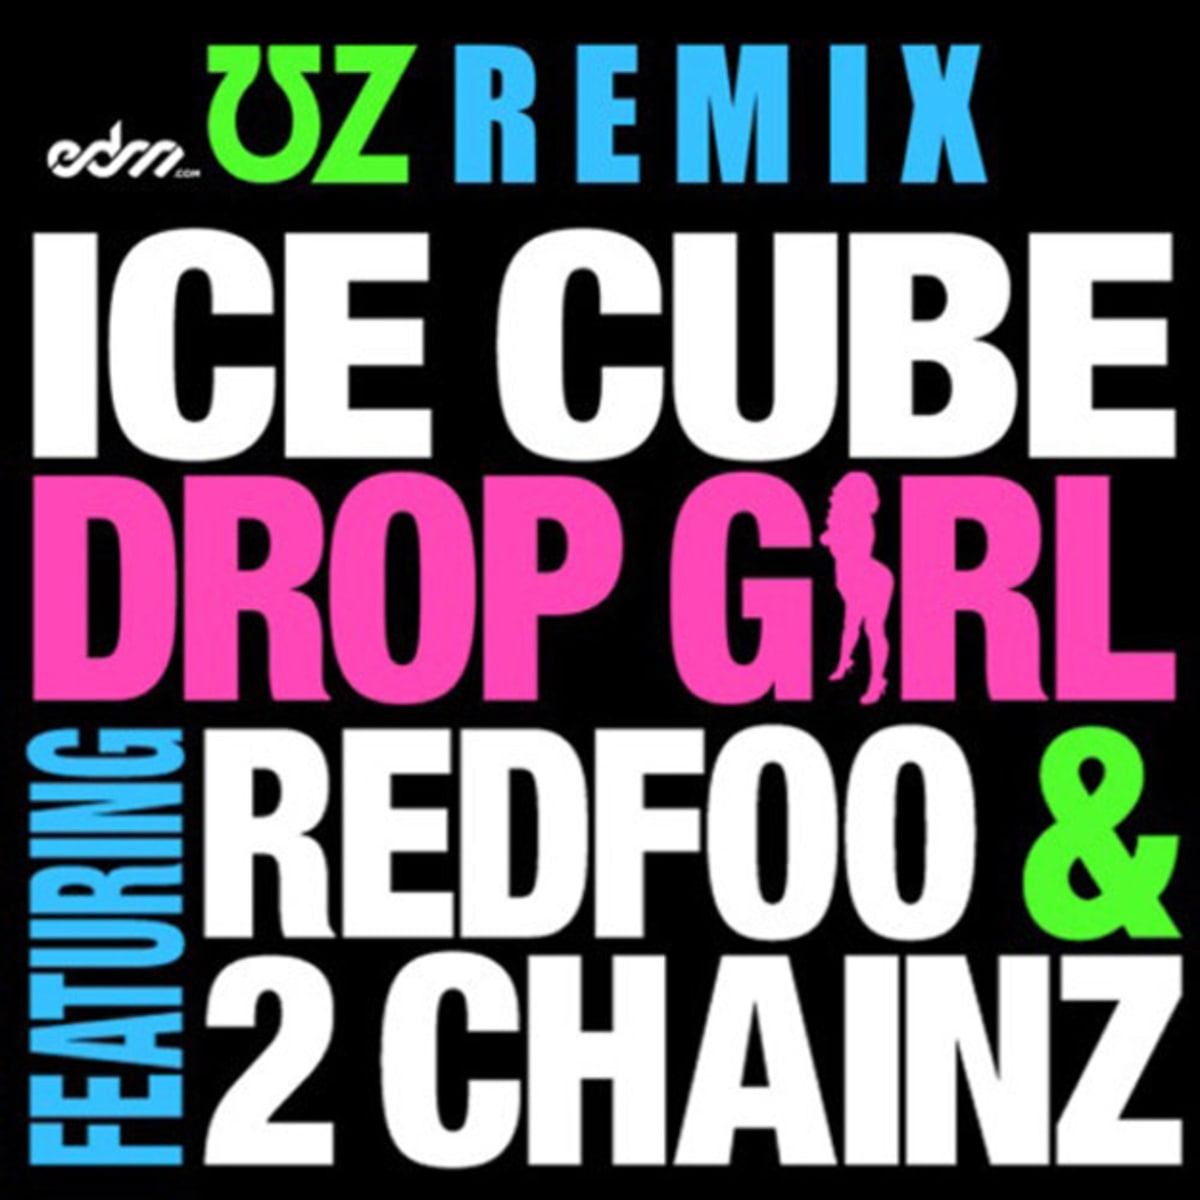 Ice Cube - Drop Girl ft Redfoo, 2 Chainz - YouTube